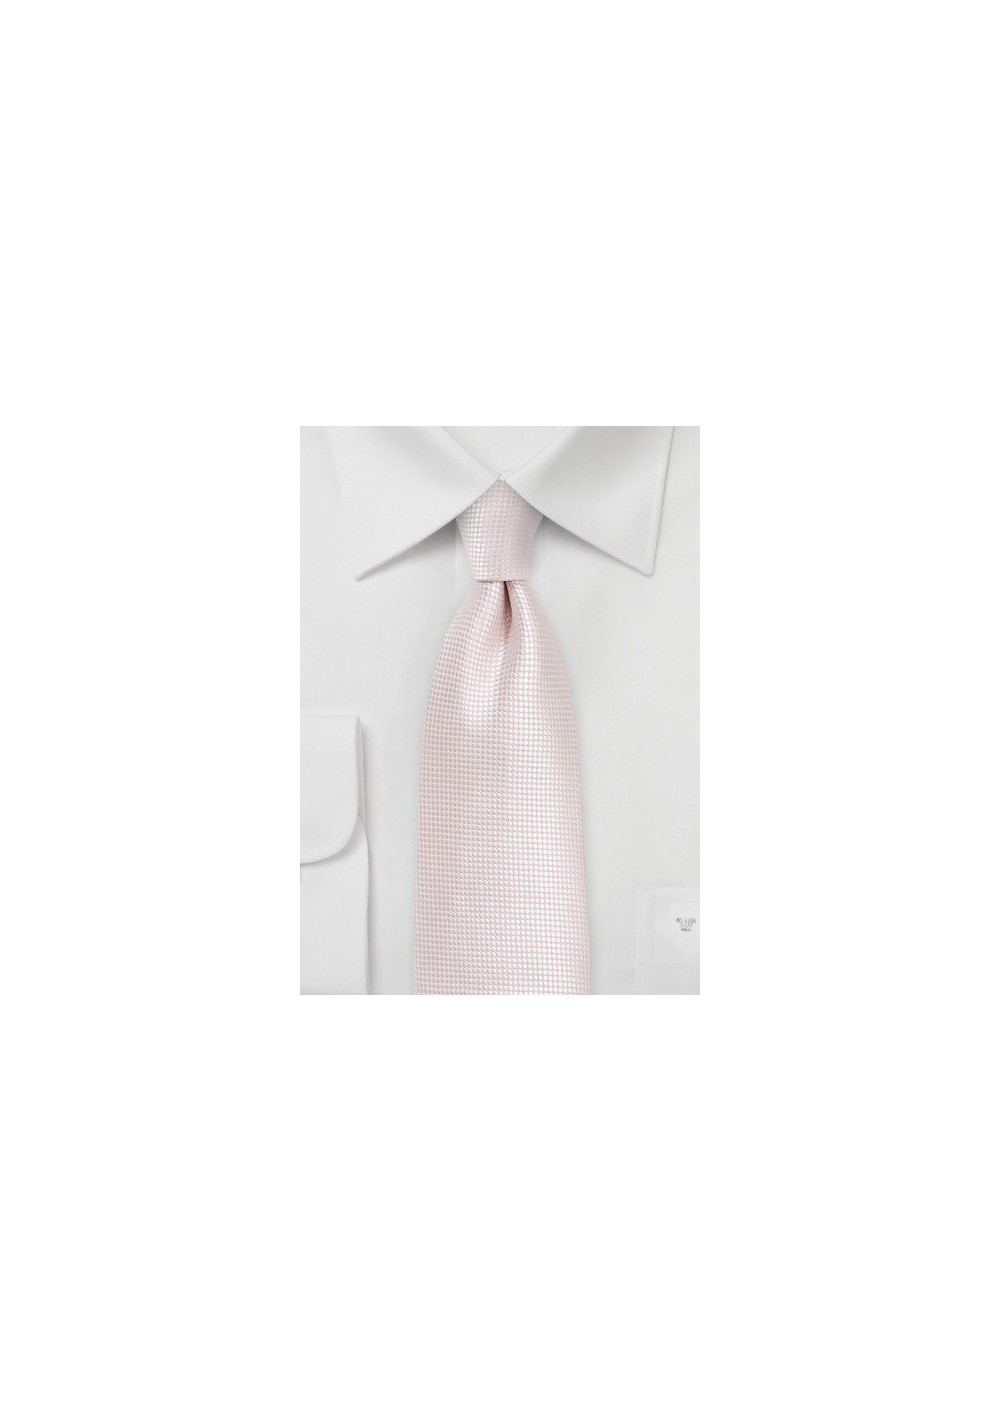 Heavenly Pink Tie in XL Length